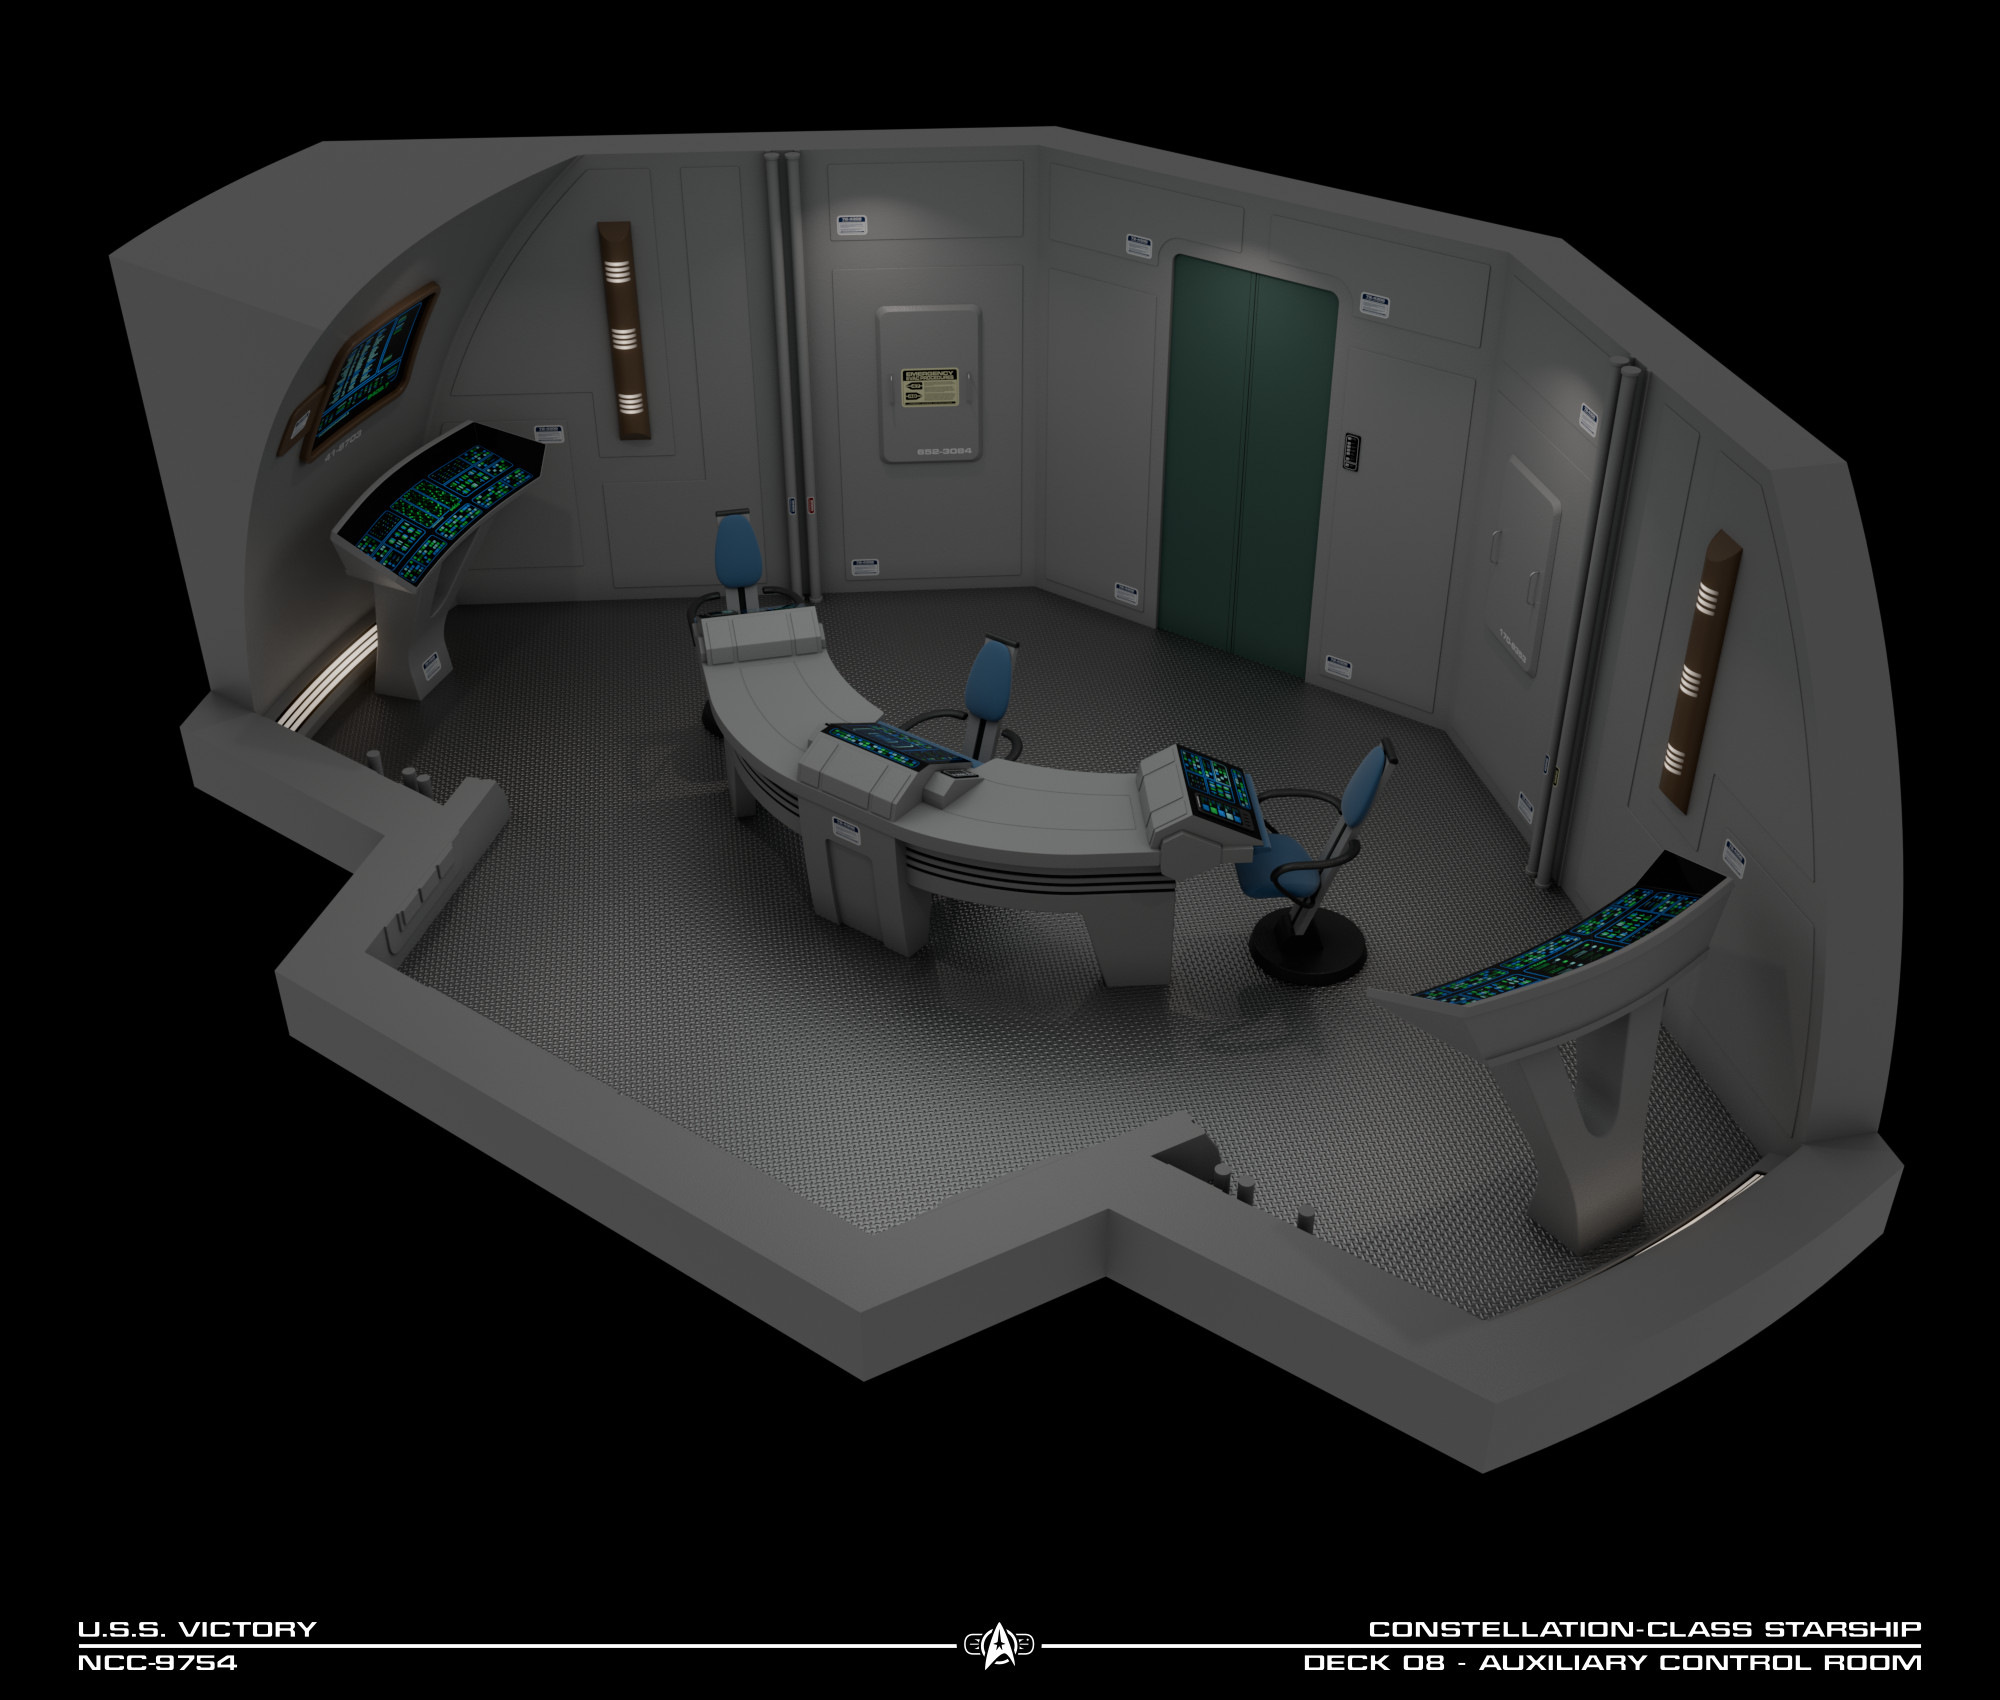 tadeo-d-oria-uss-victory-auxiliary-control-room-cutaway.jpg?1714759281